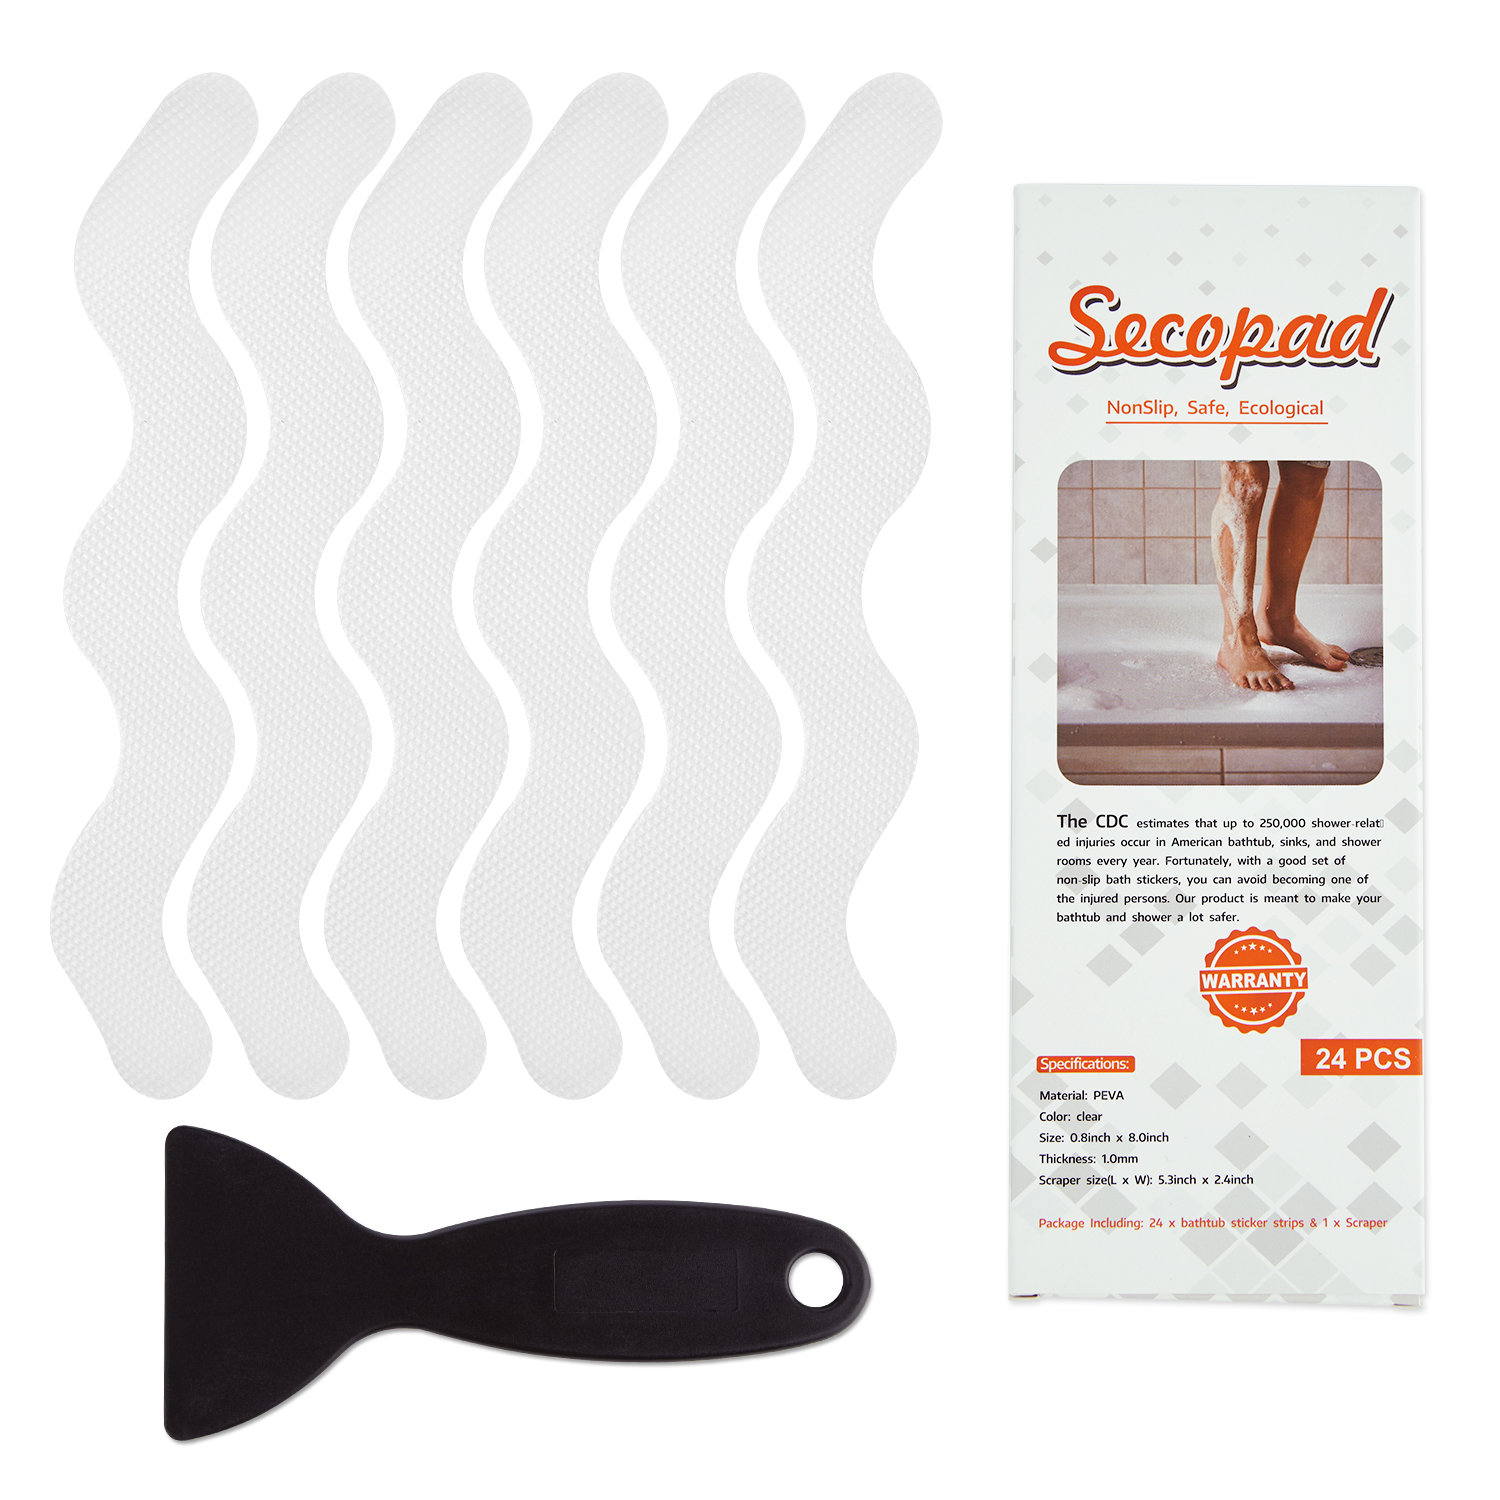 Anti-slip Strips, Safety Shower Treads Stickers - 24 Pcs, Bathtub Non Slip  Stickers, Anti Skid Tape for Shower,Tub,Steps, Floor-Strength Adhesive Grip